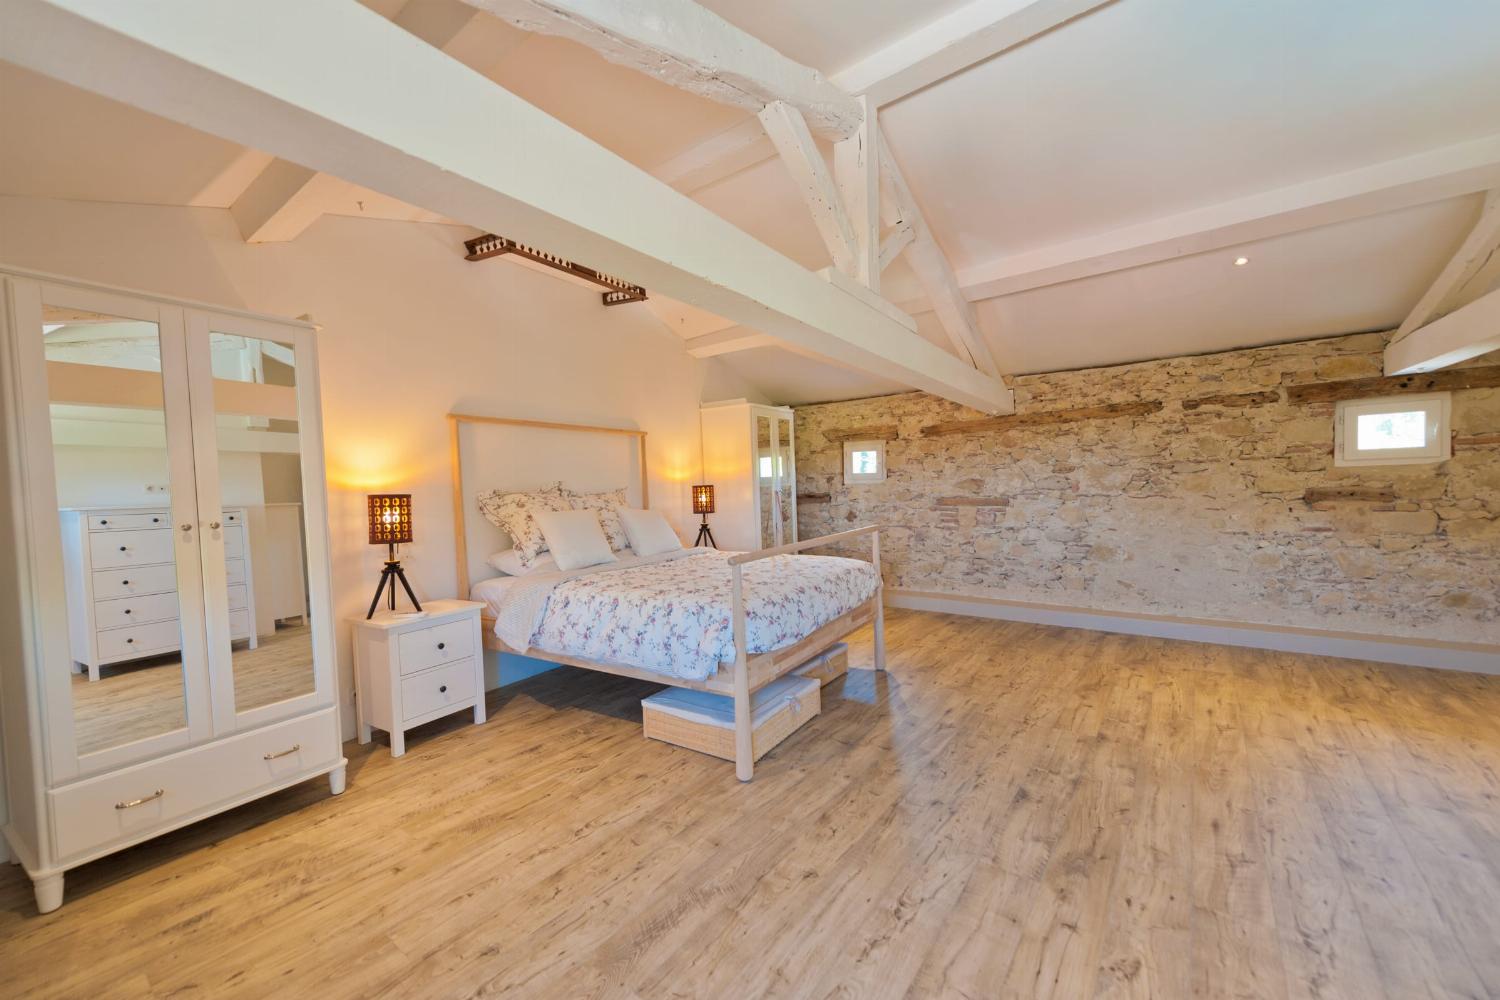 Bedroom | Rental home in the Tarn